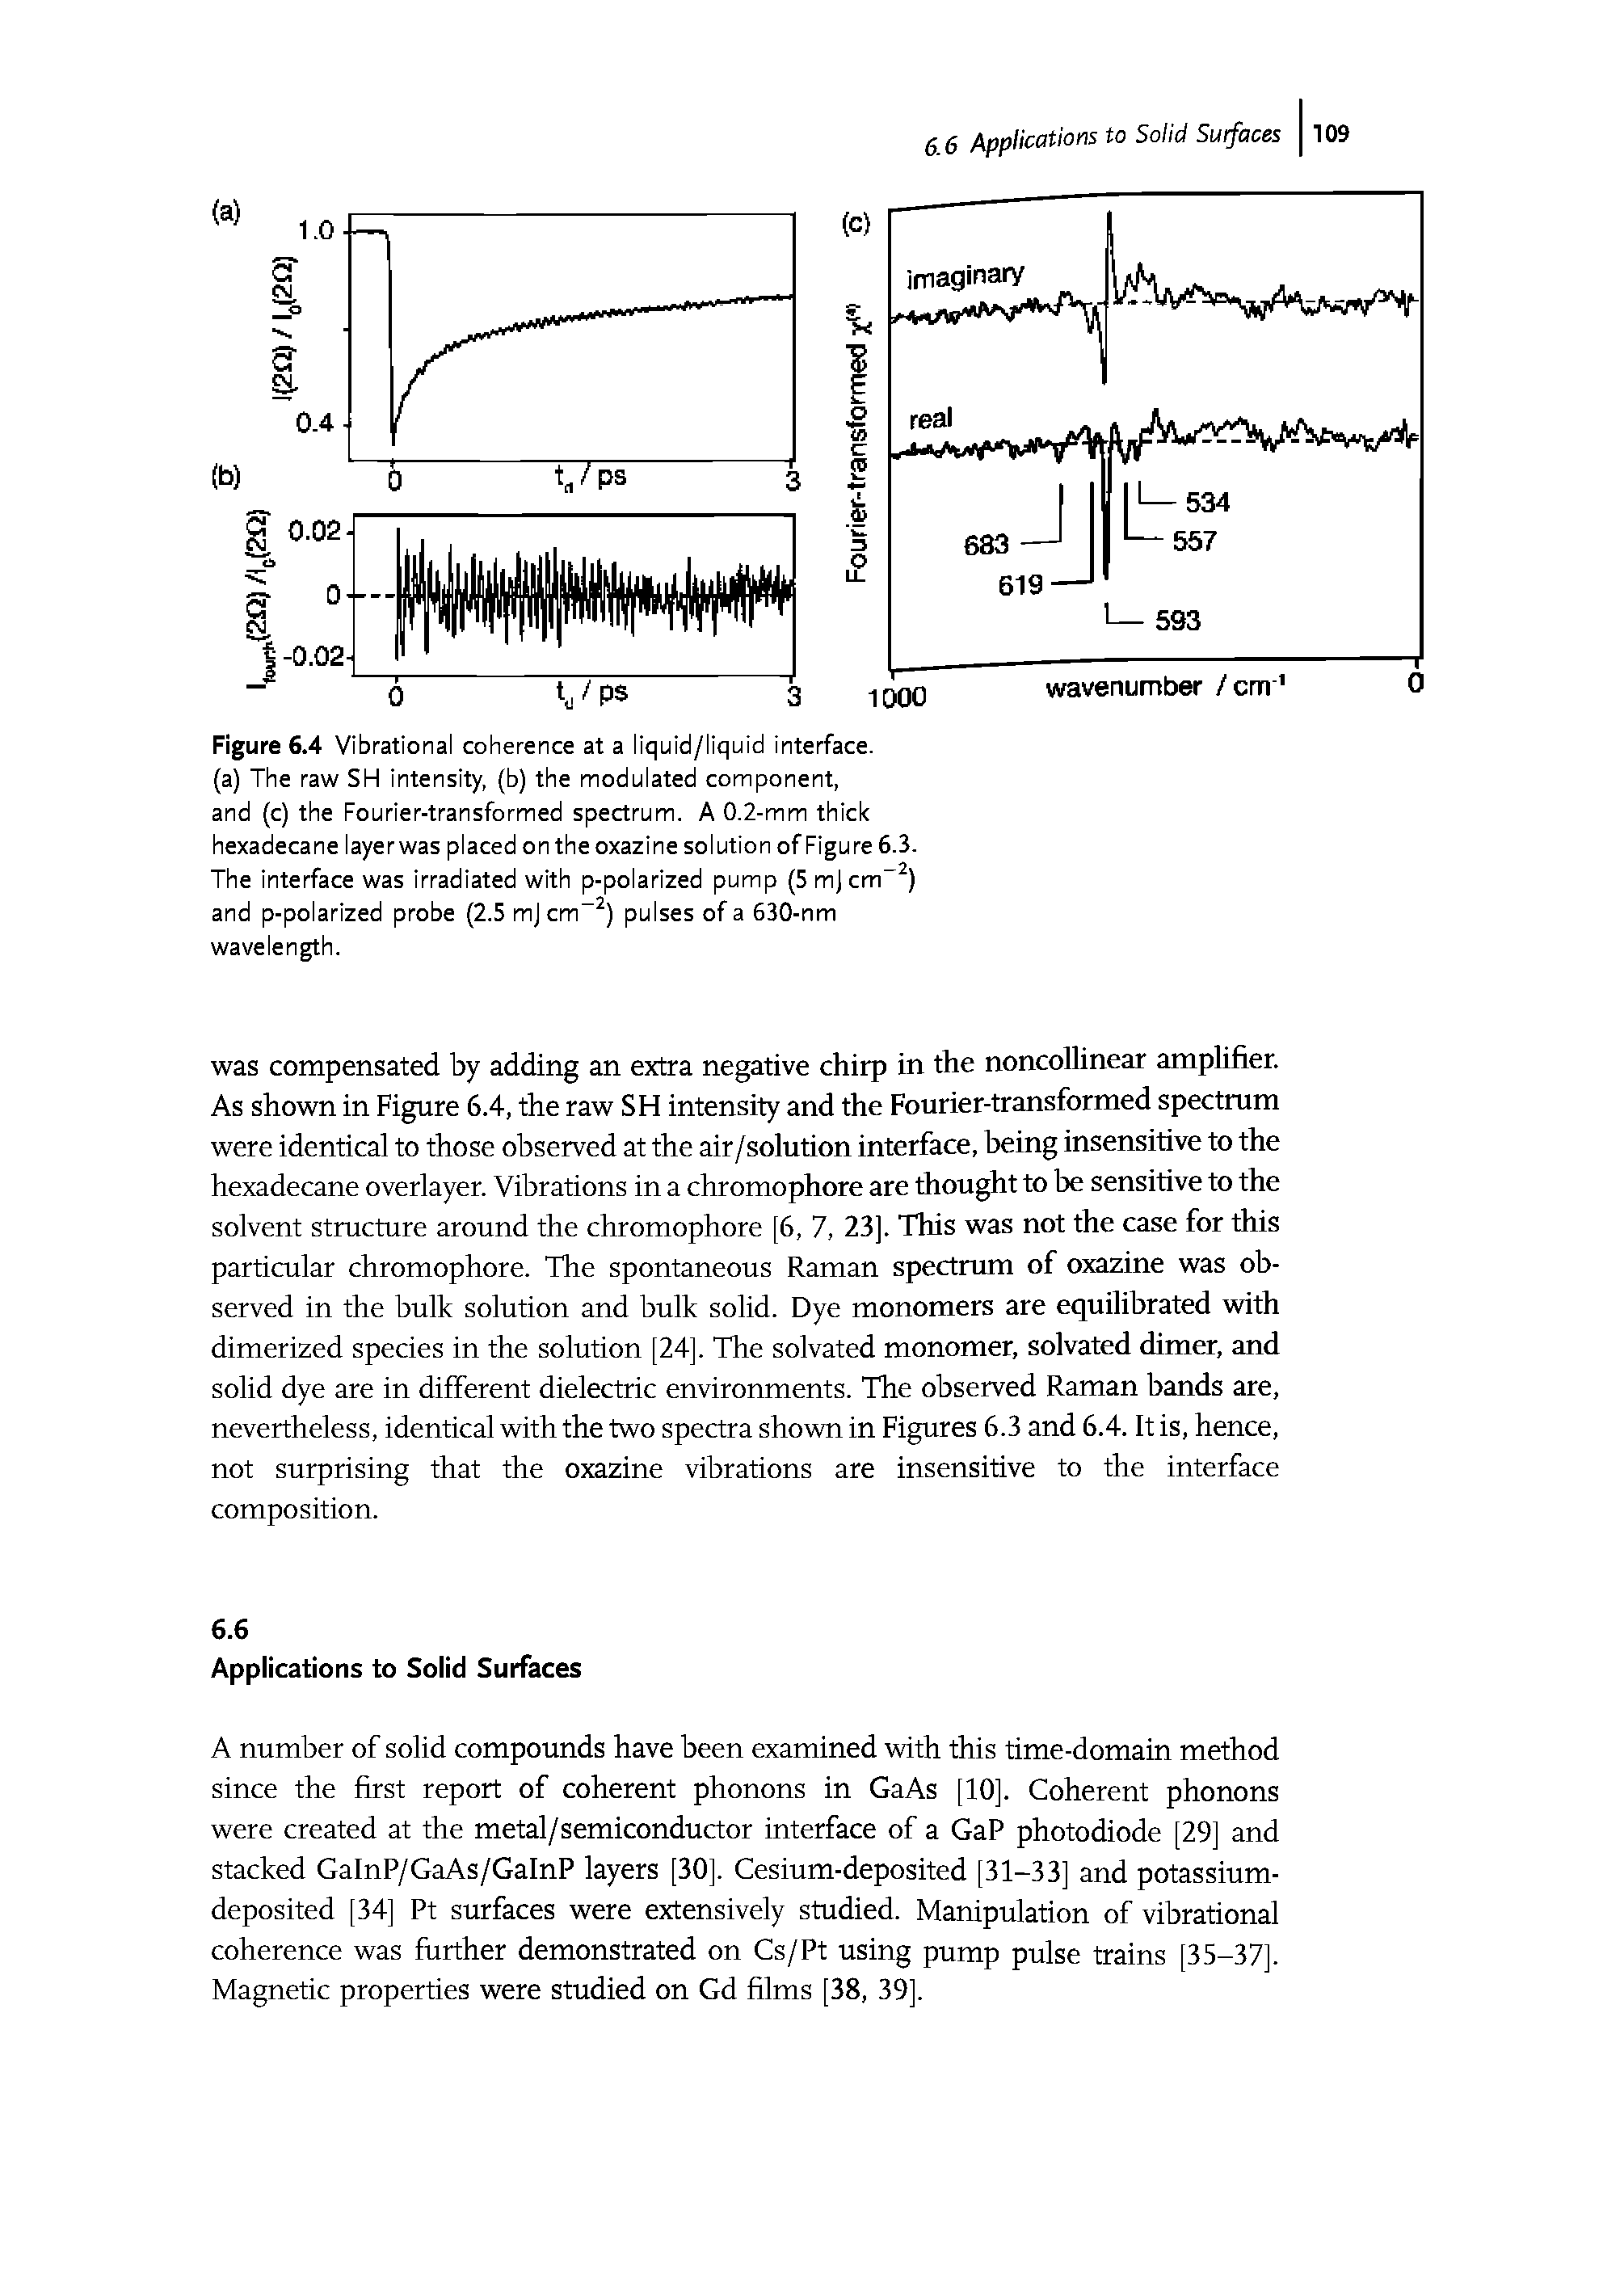 Figure 6.4 Vibrational coherence at a liquid/liquid interface.